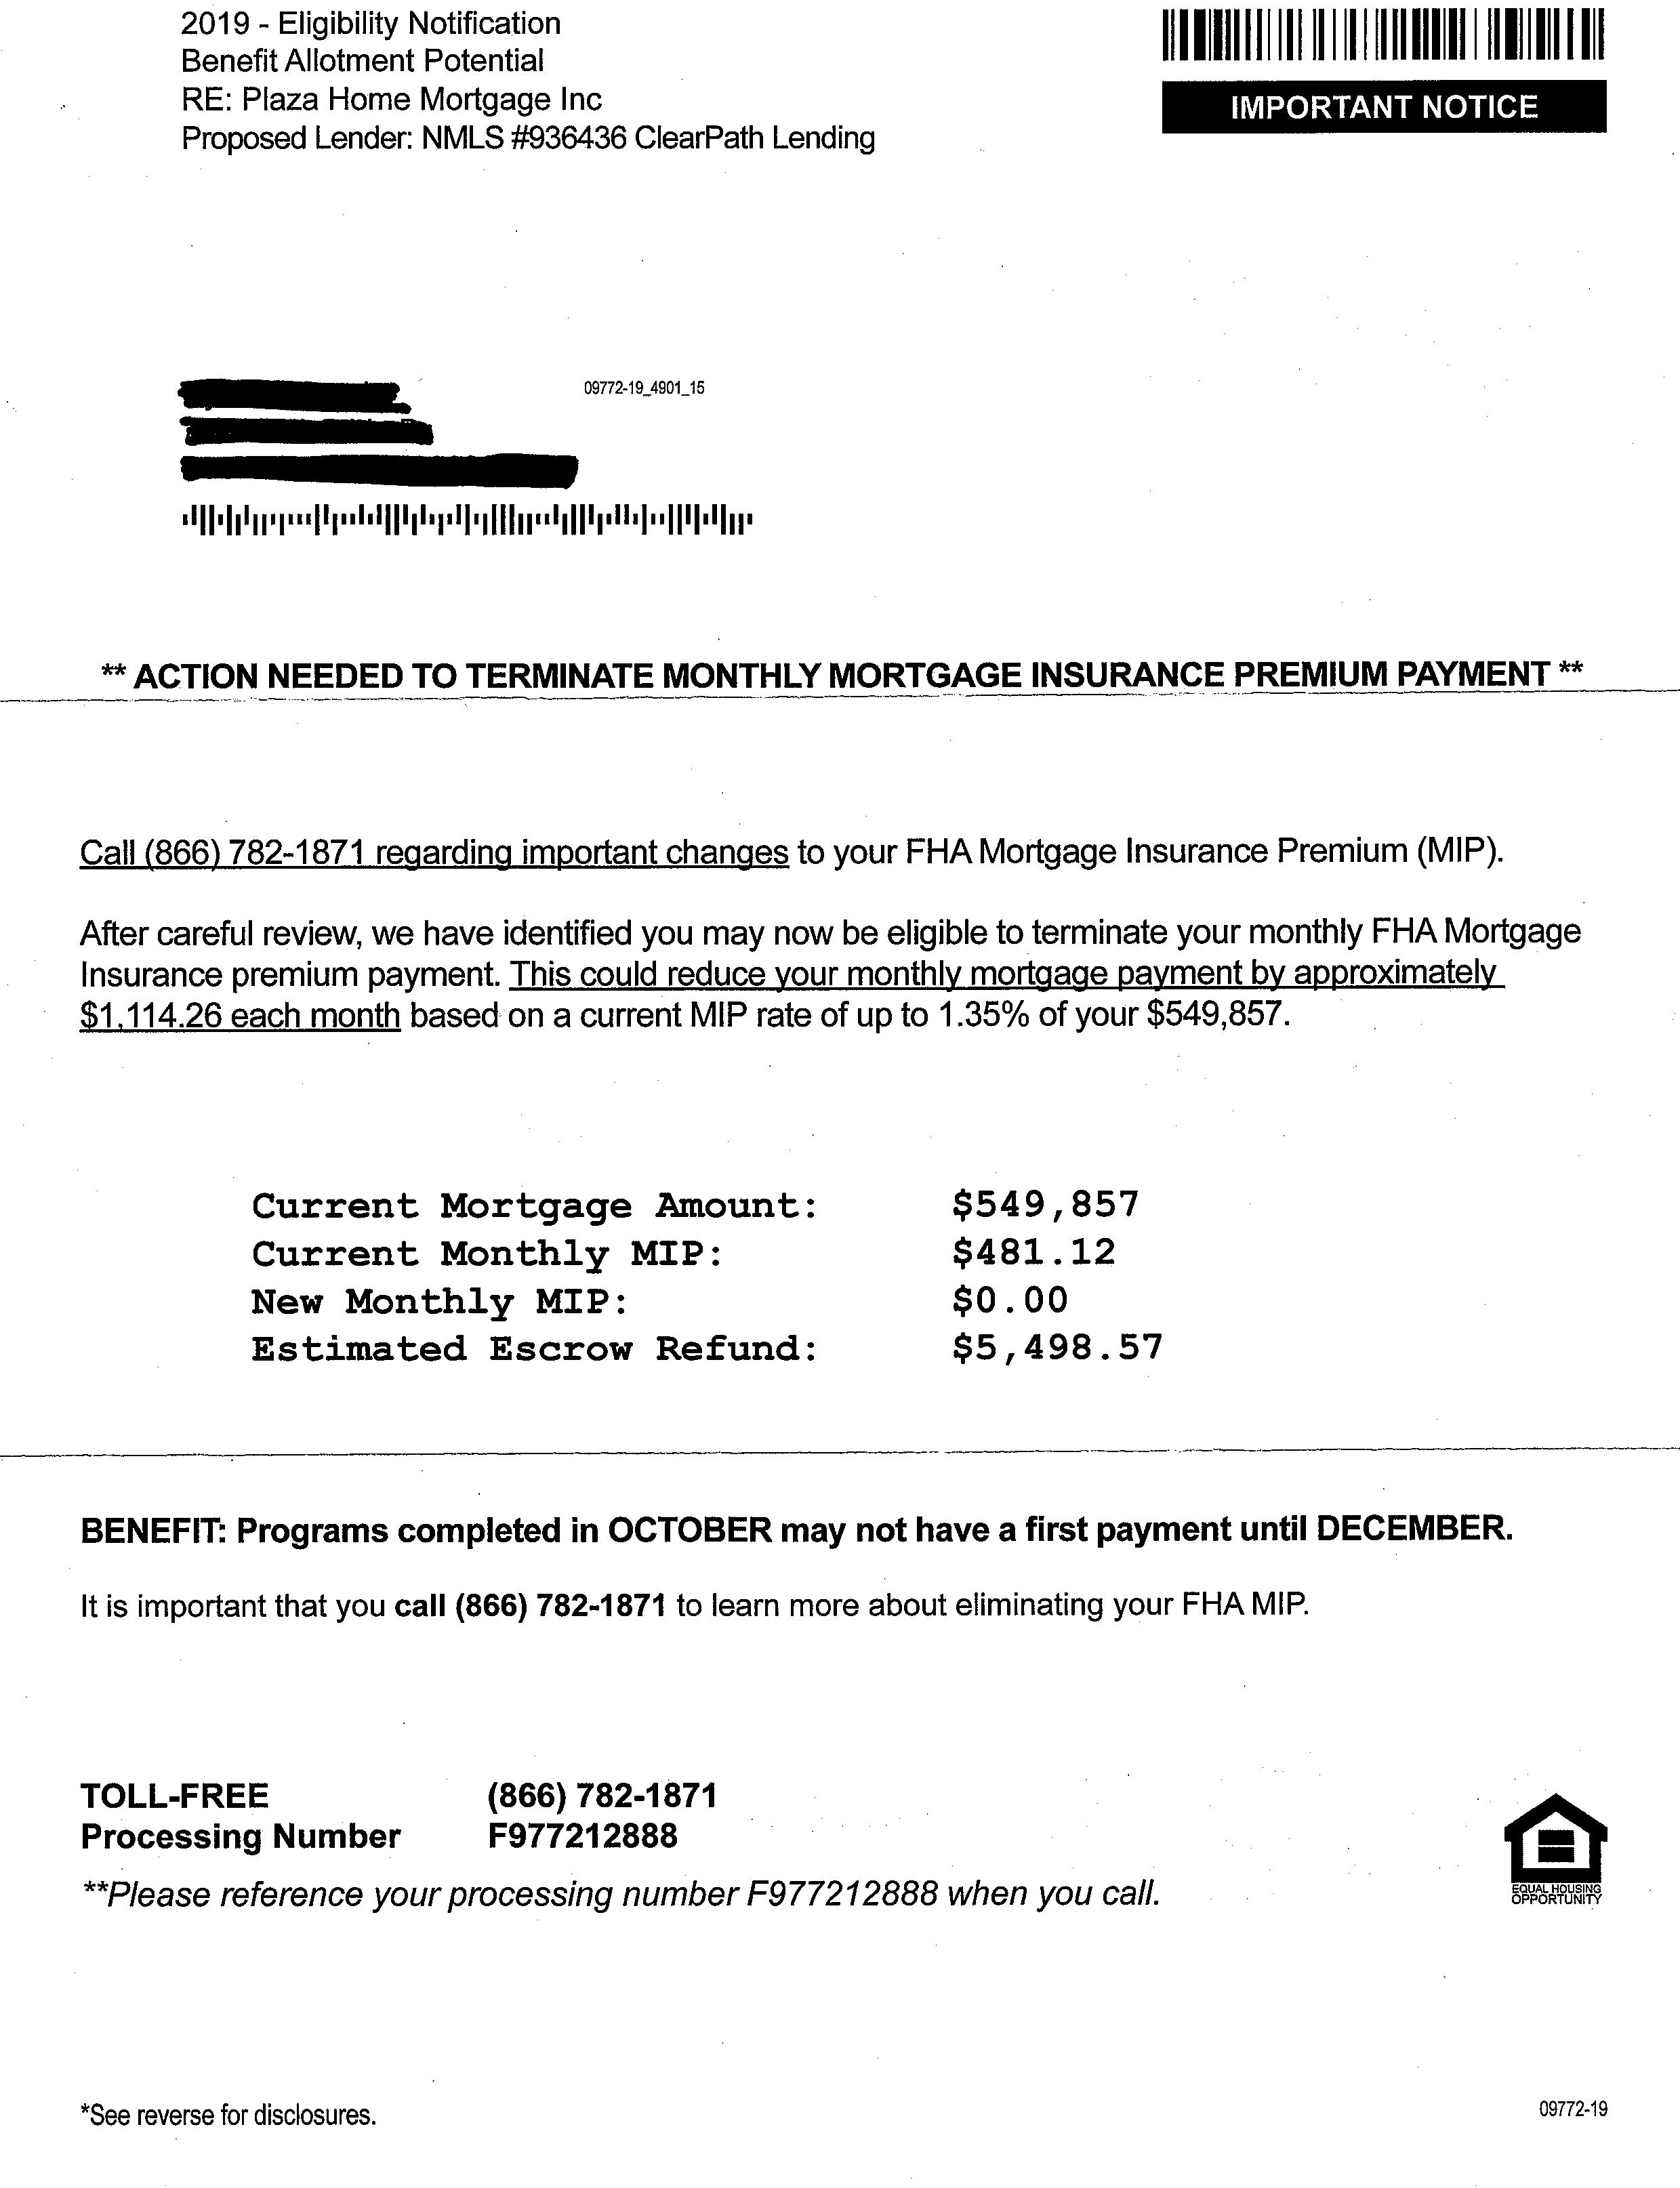 Mortgage Mailer Sample 11.jpg